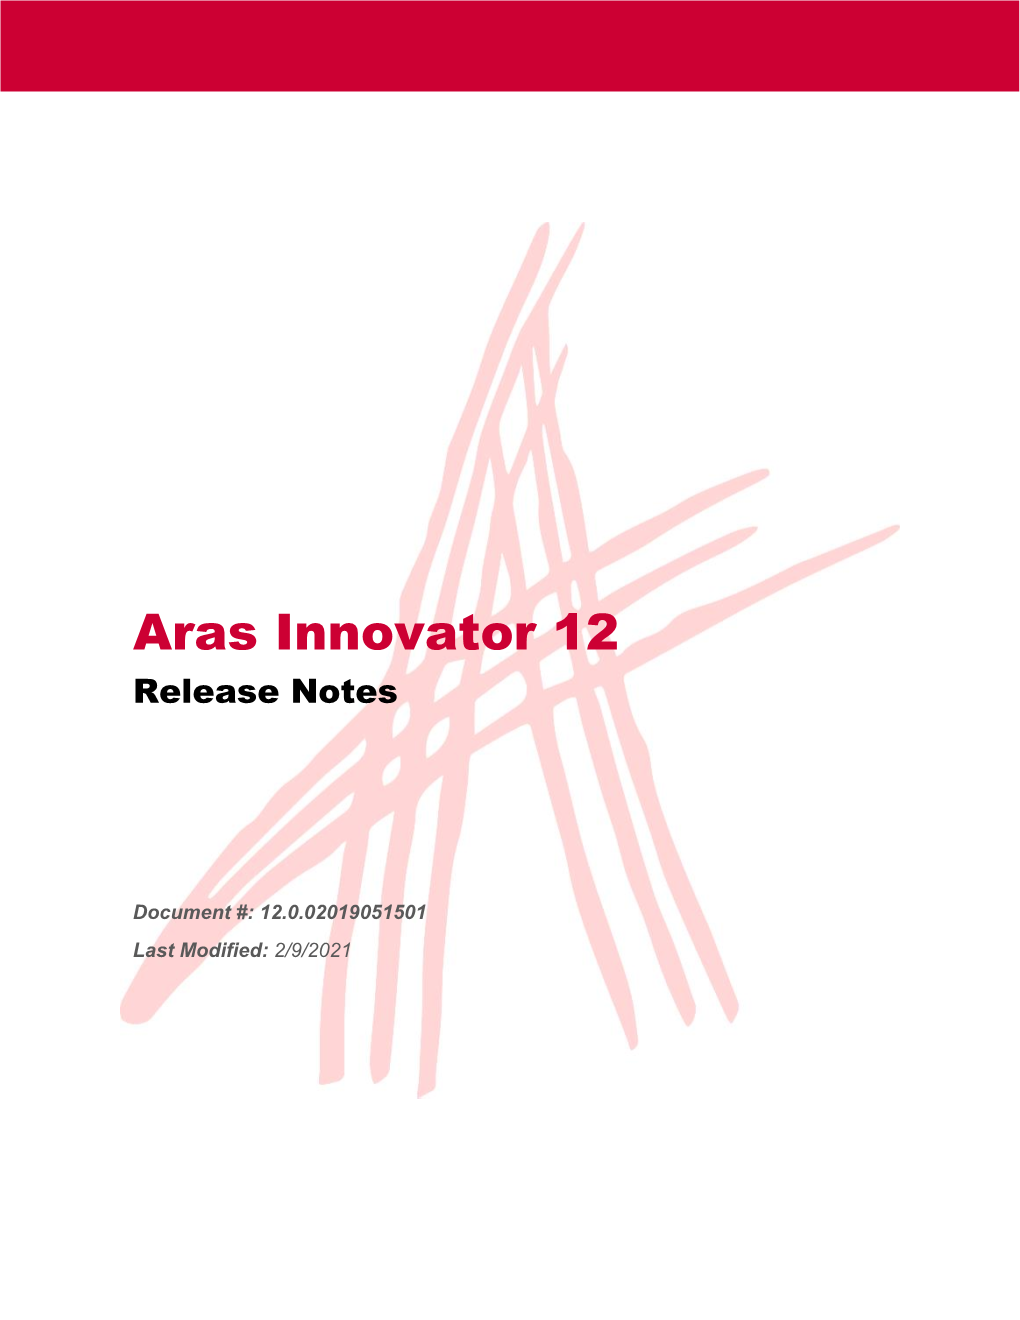 Aras Innovator 12 Release Notes